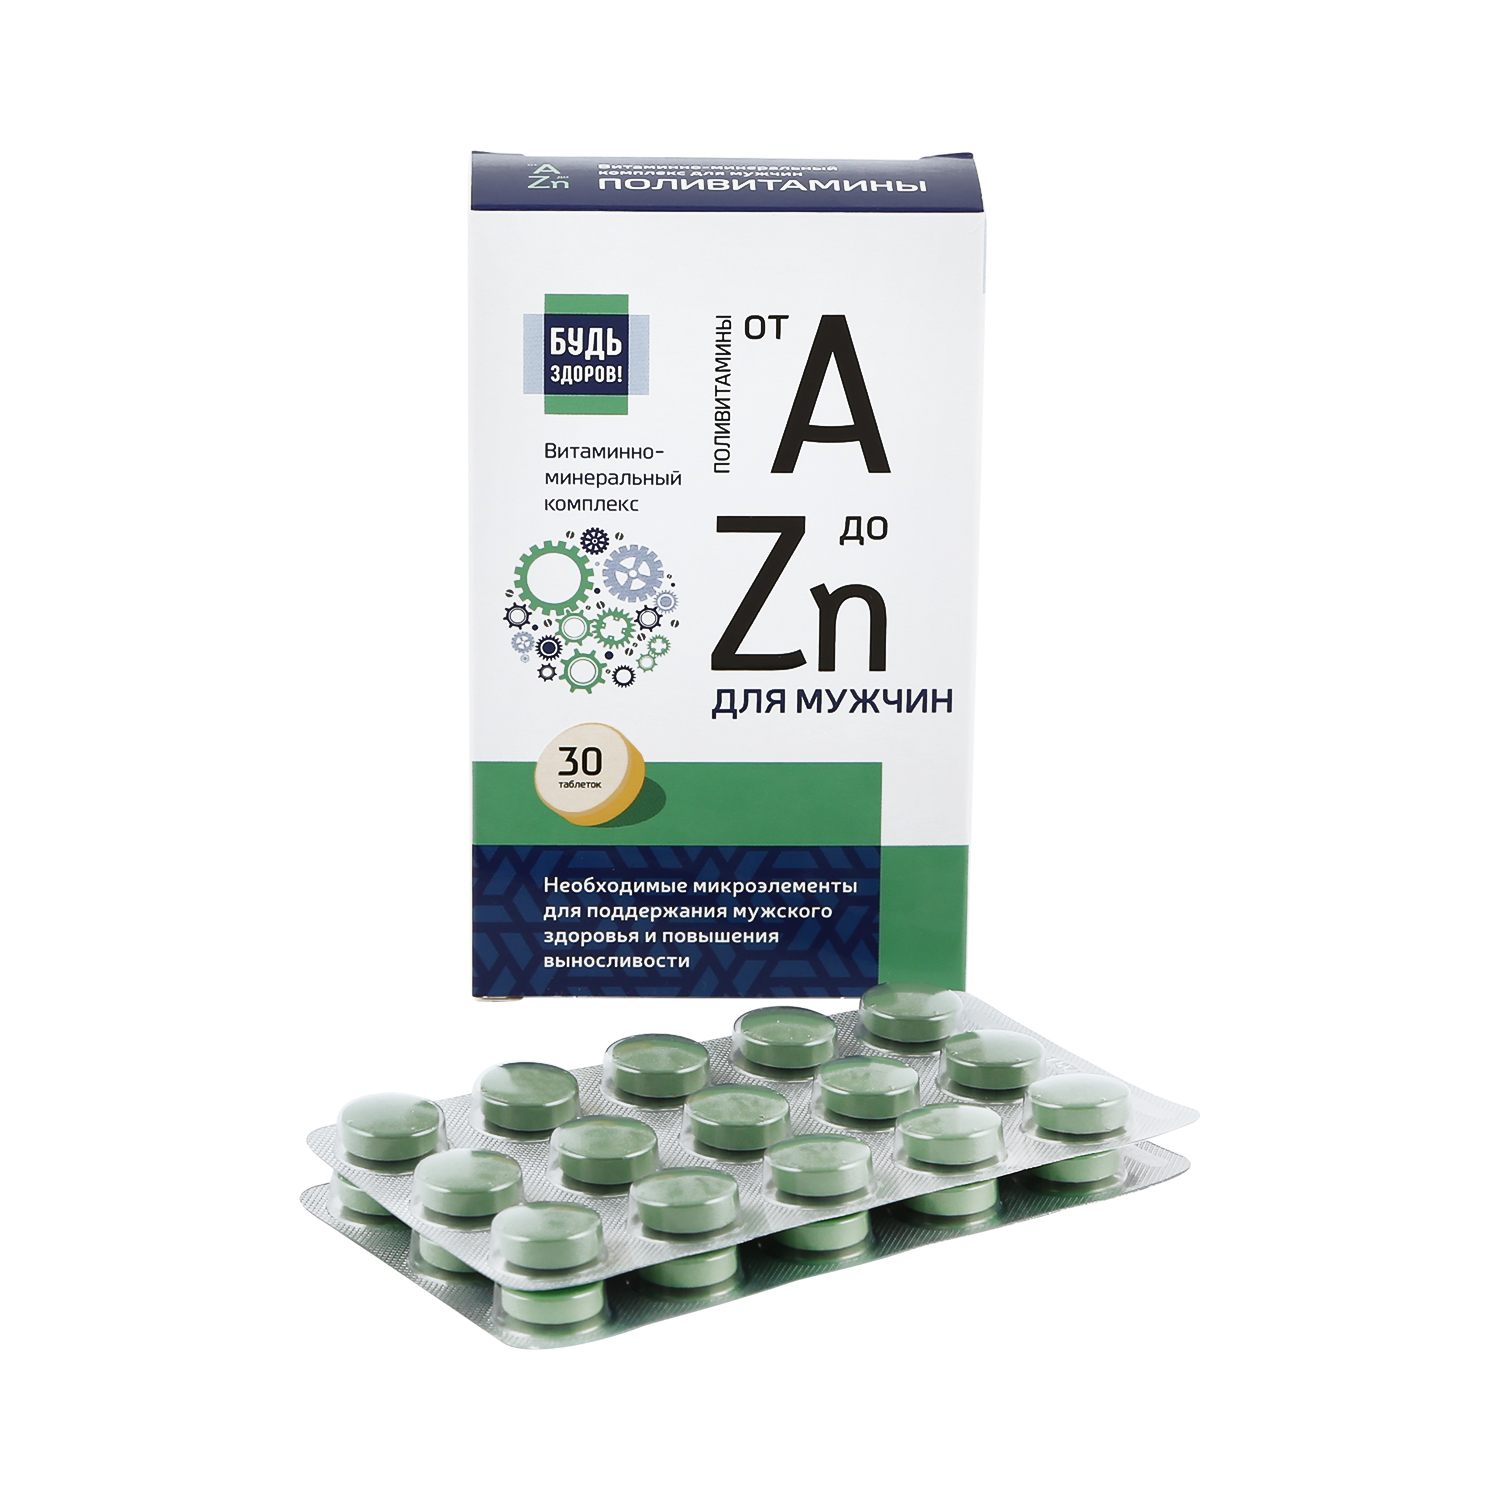 A zn таблетки отзывы. Витаминно-минеральный комплекс а-ZN таб. №30 для мужчин. Витаминный комплекс от а до ZN таб 30. Витаминно-минеральный комплекс от а до ZN для мужчин. Витаминный комплекс для мужчин a -ZN 30таб.